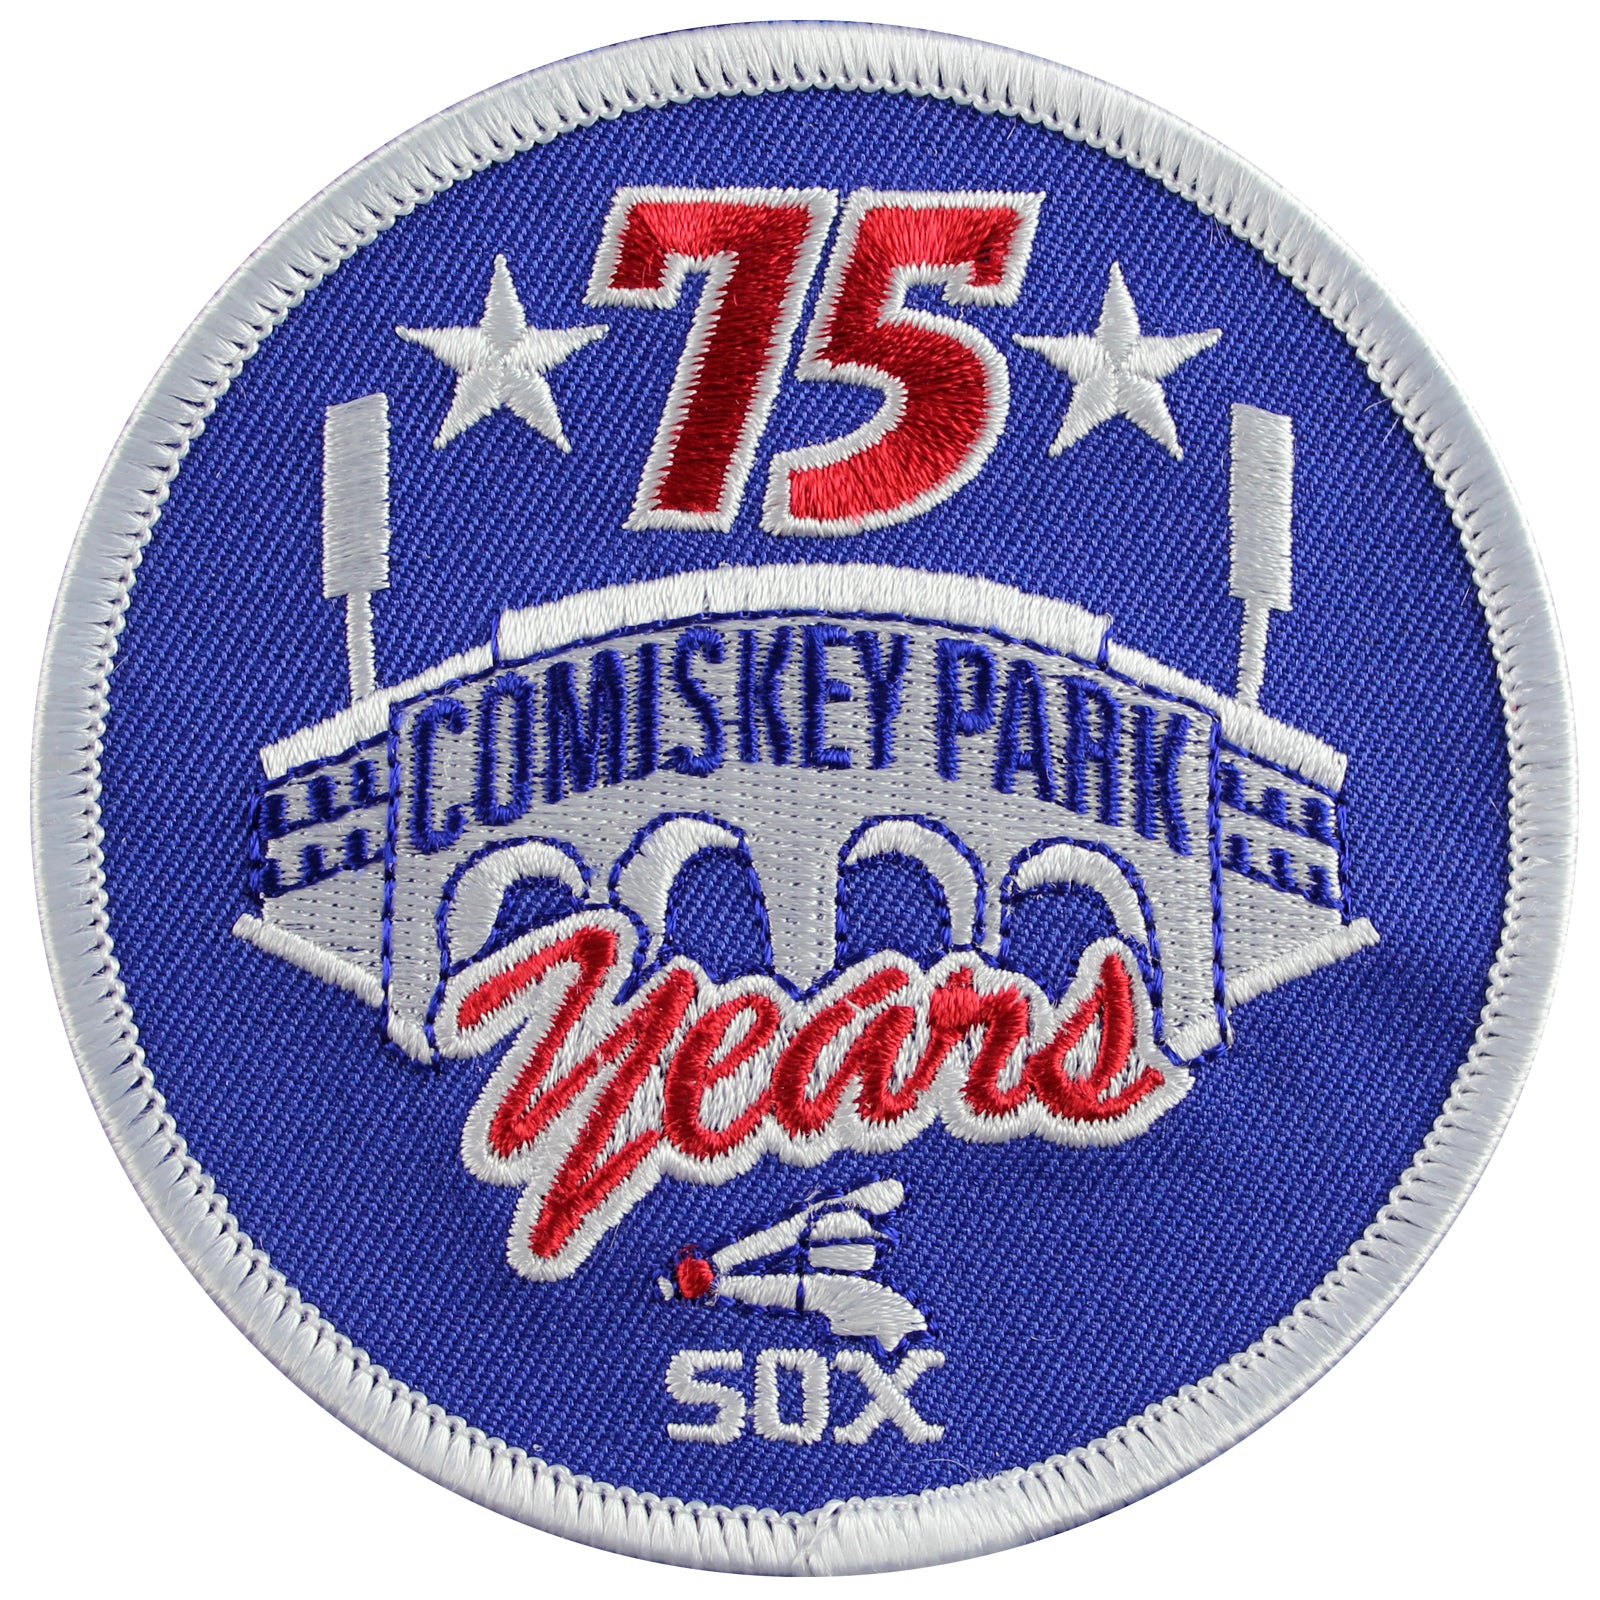 Chicago Stadium 60th Anniversary Patch - Puck Junk